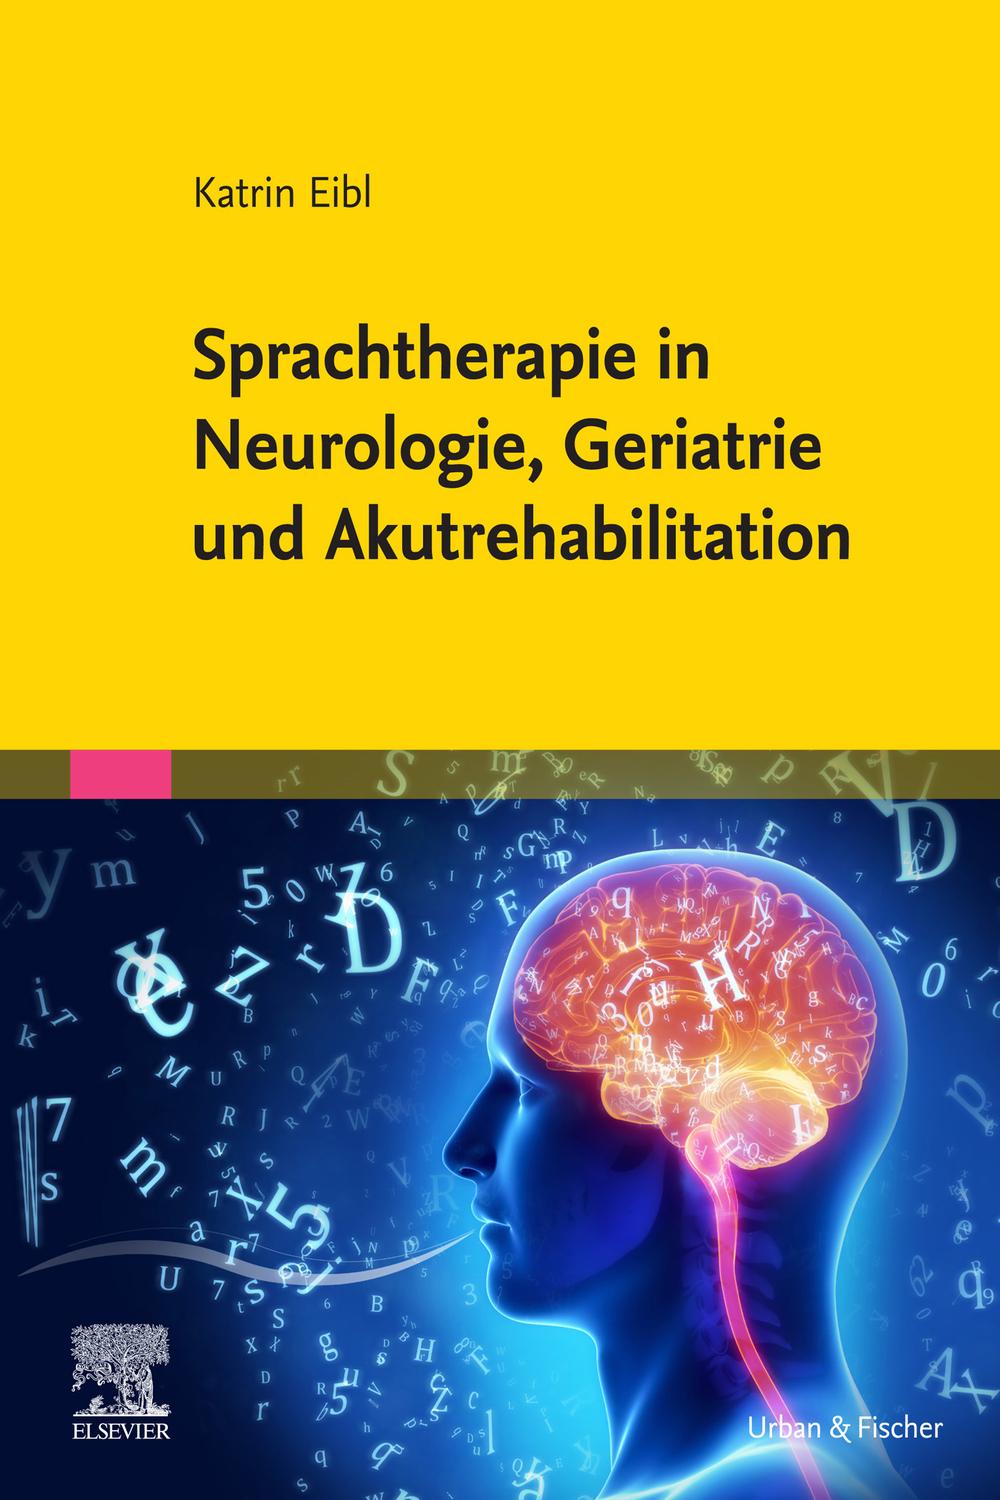 Sprachtherapie in Neurologie, Geriatrie und Akutrehabilitation - Katrin Eibl, Carmen Simon, Christian Tilz, Wolfgang Kriegel